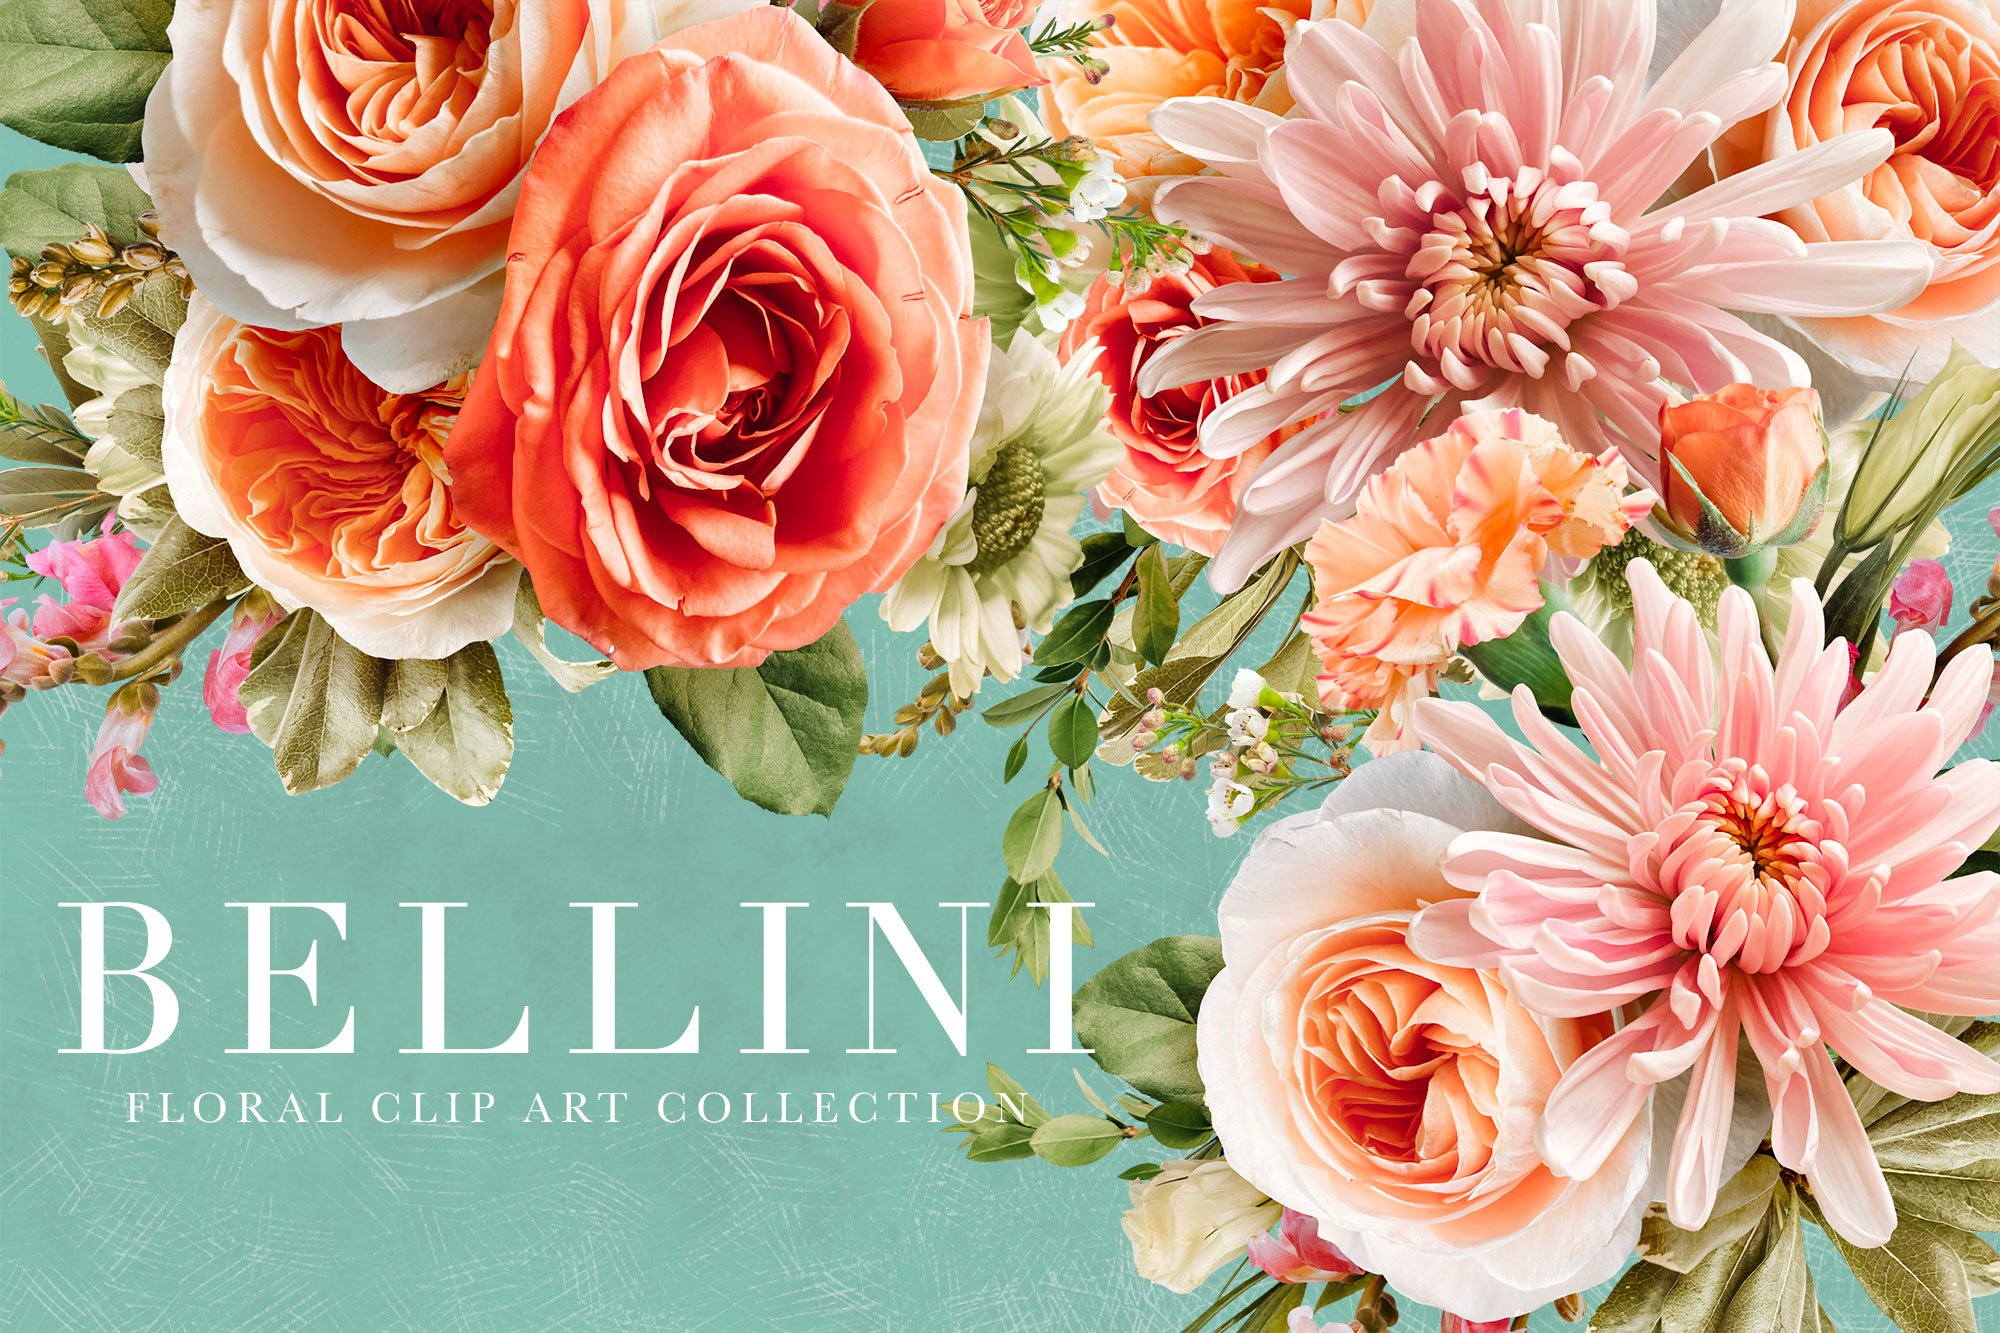 Bellini Floral Clip Art Collection